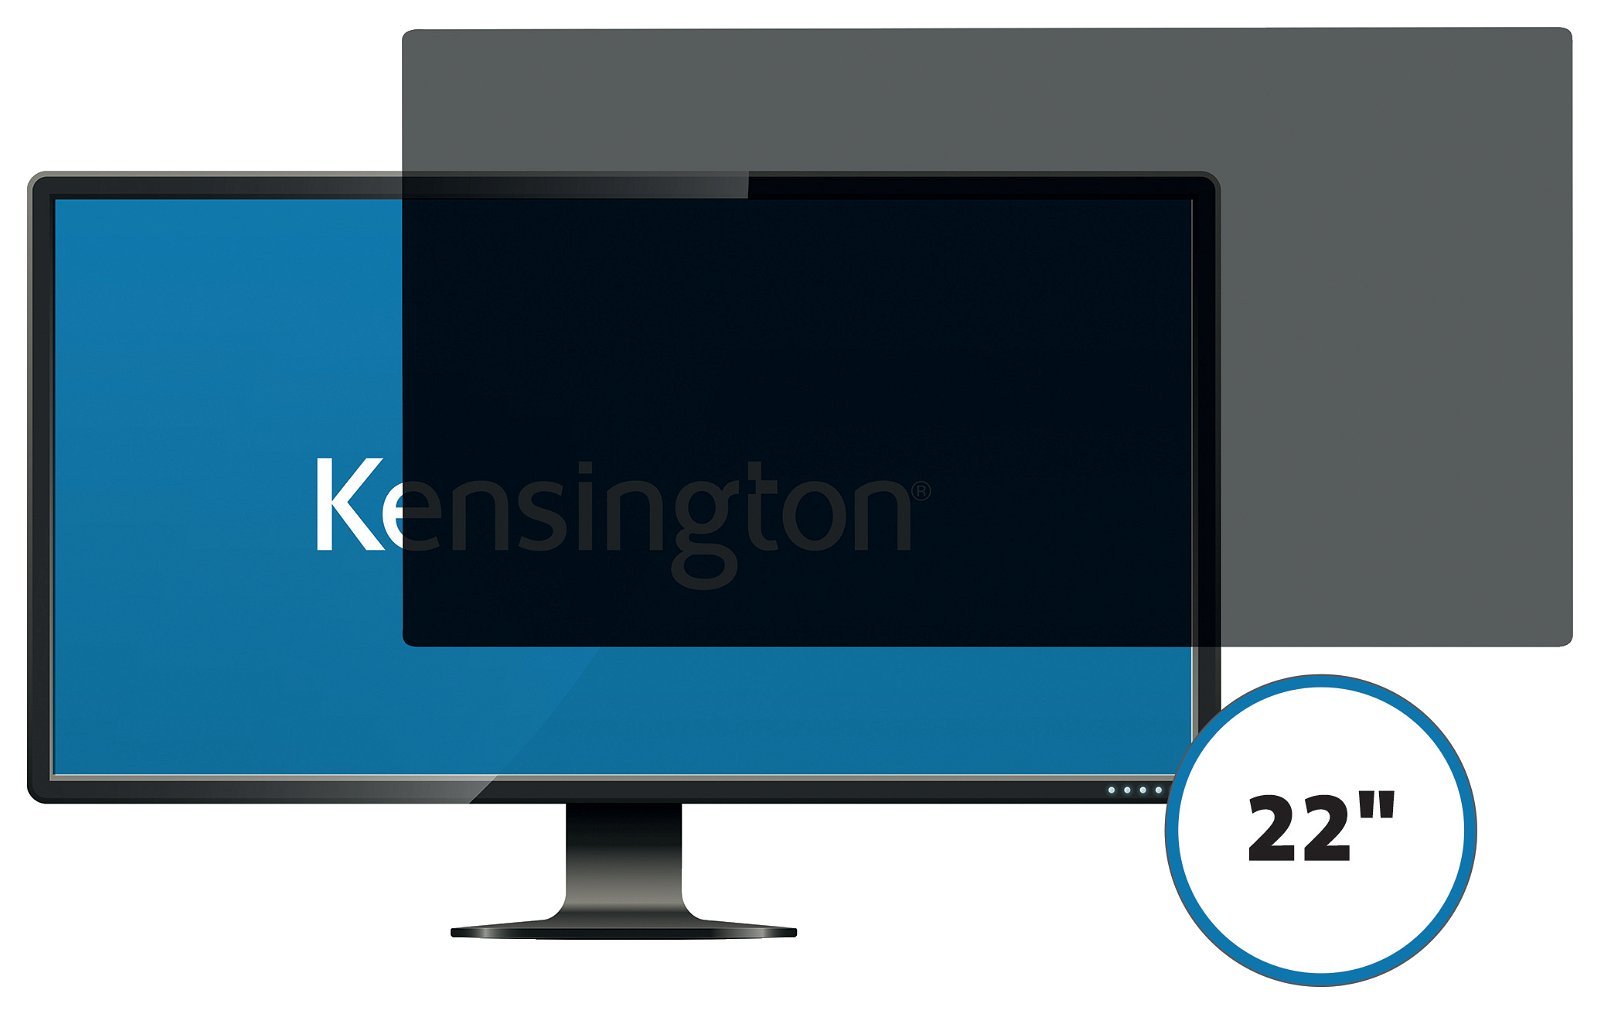 Kensington skærmfilter 22" 16:9 transparent